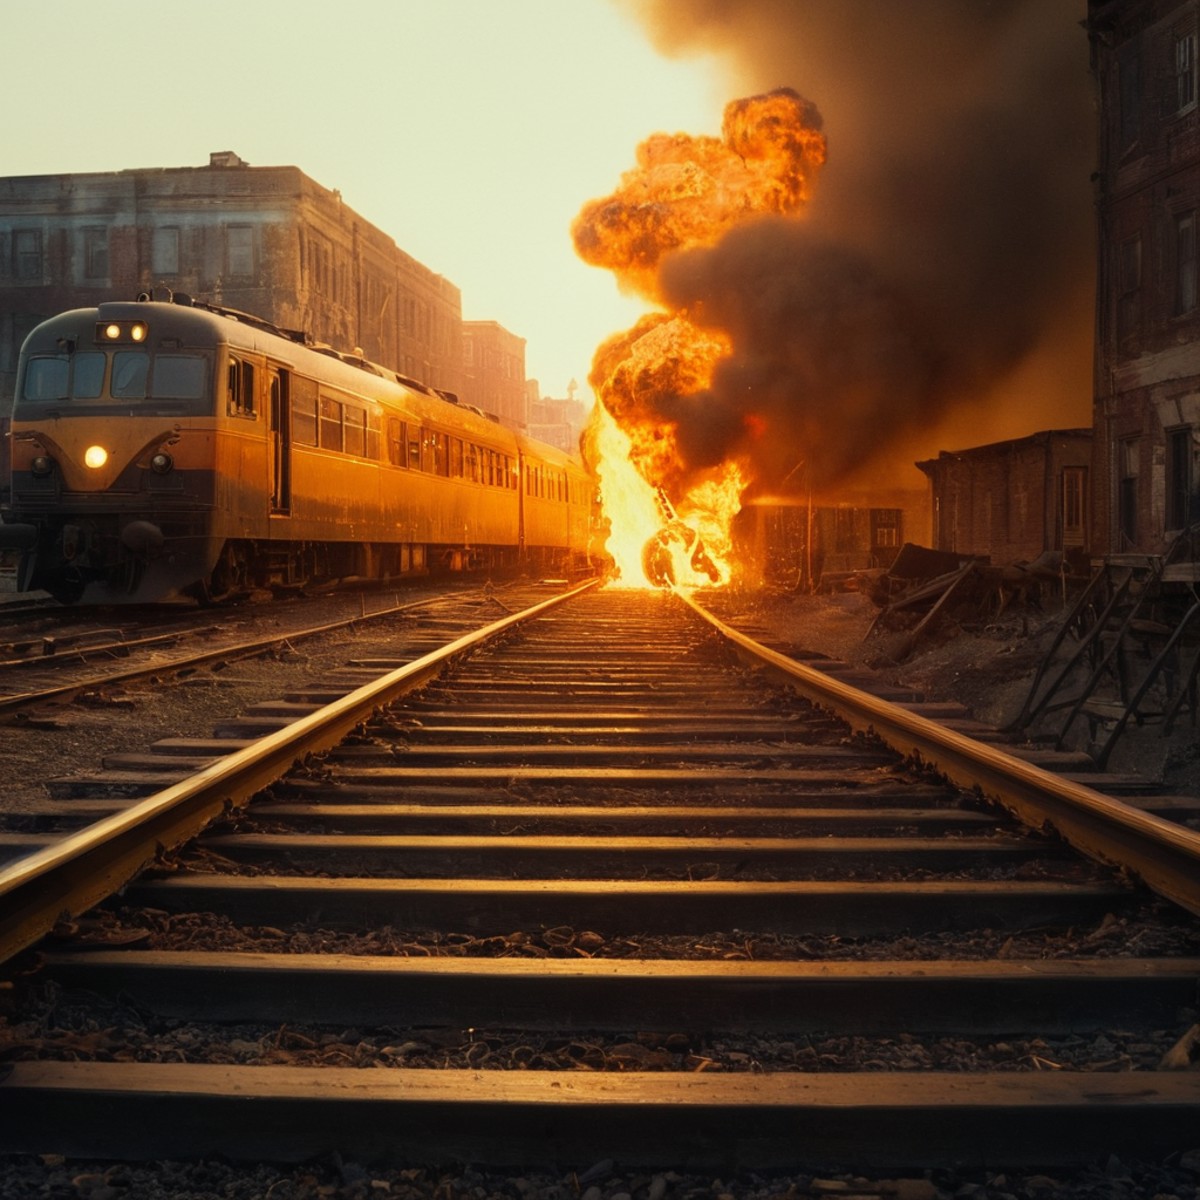 cinematic film still of  <lora:Warm Lighting Style:1>
warm light,a train is on railroad and a train is on fire,warm lighti...